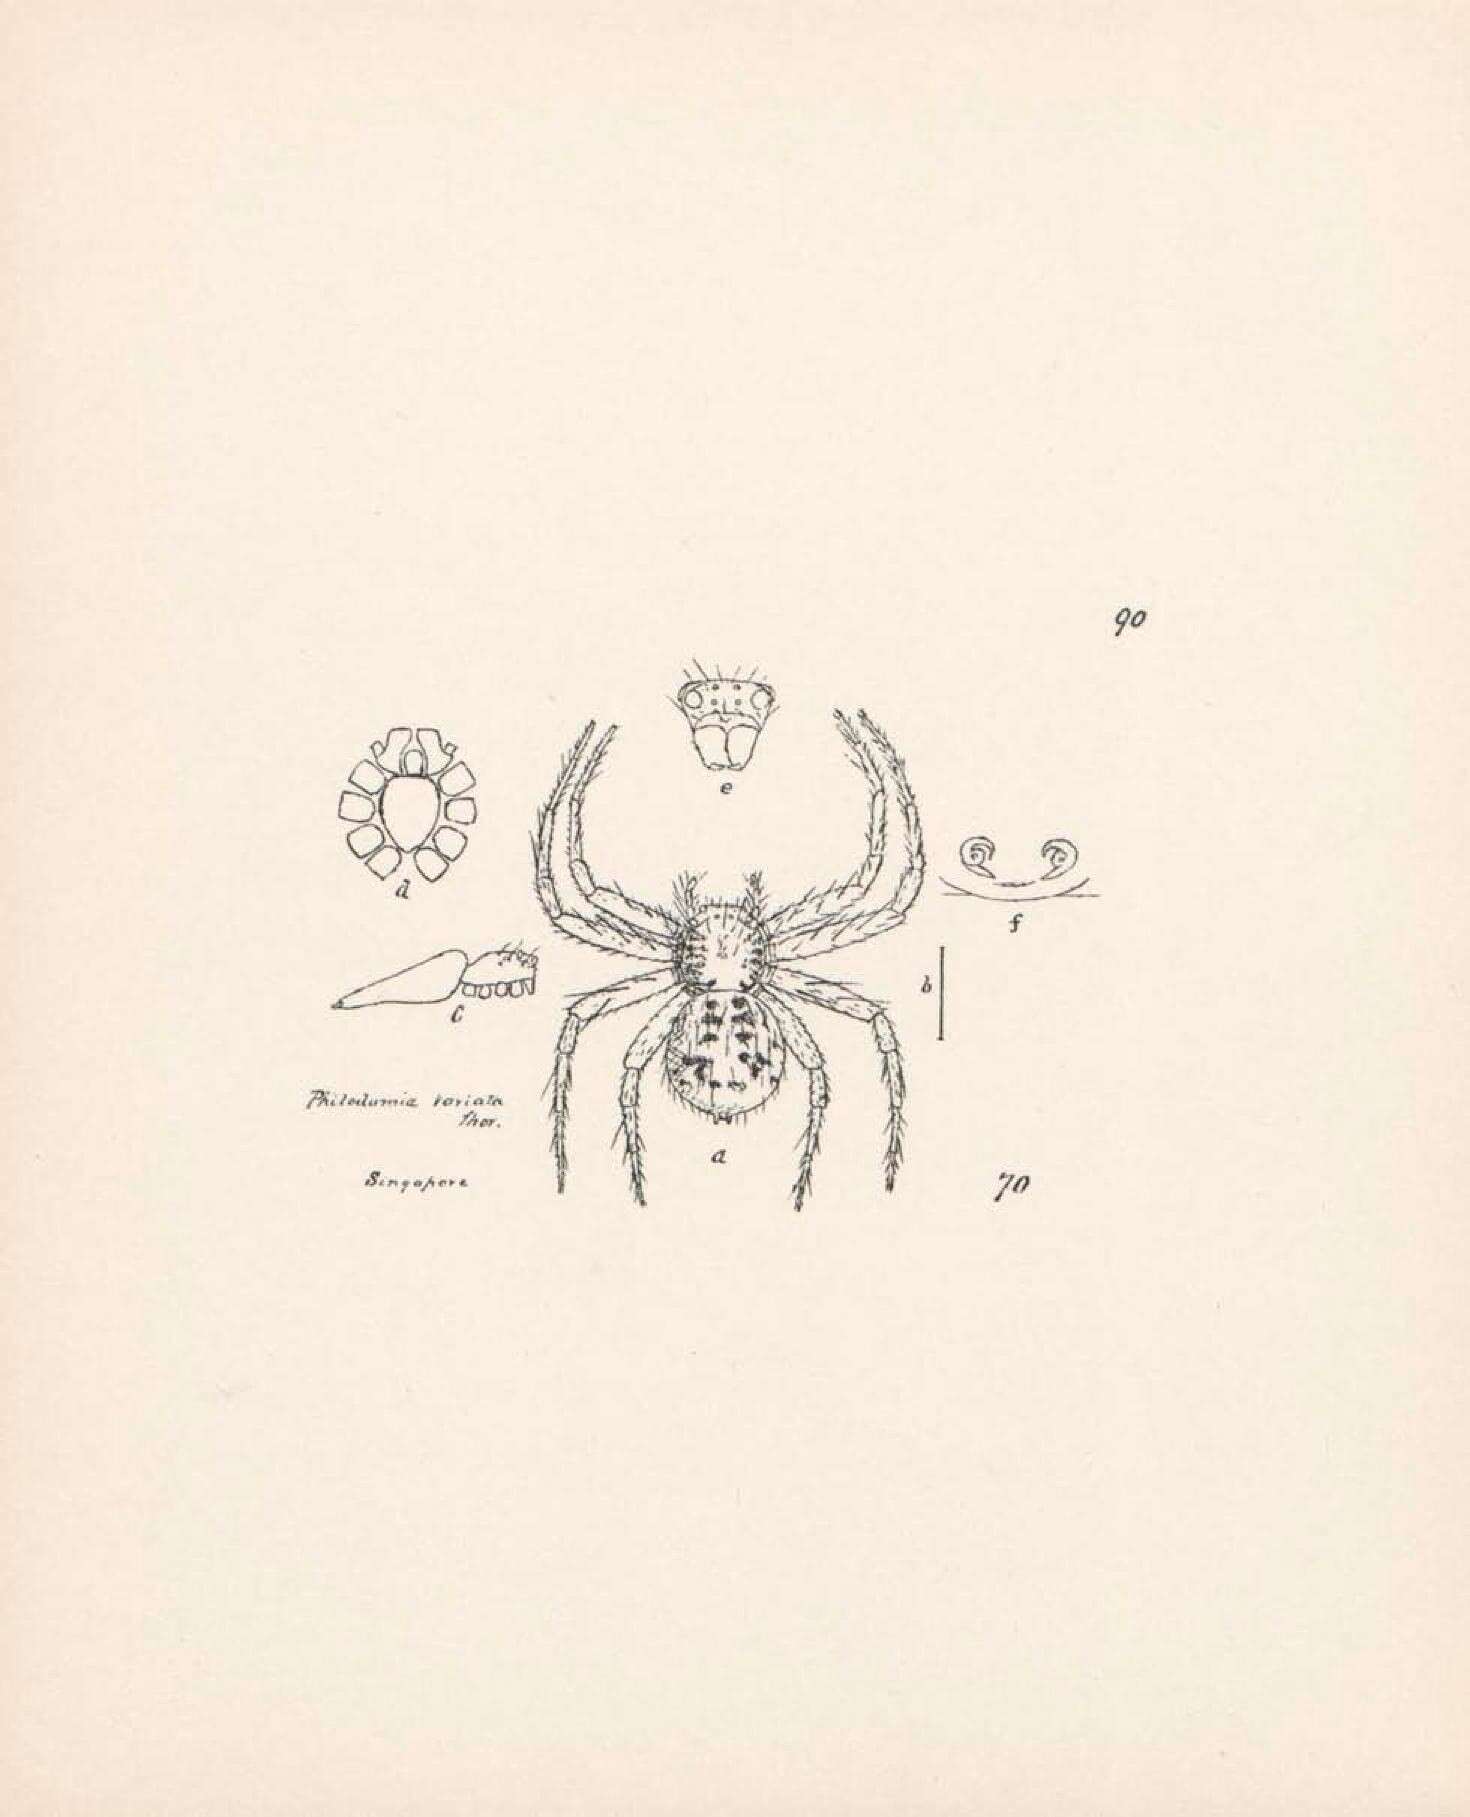 Image of Philodamia variata Thorell 1894